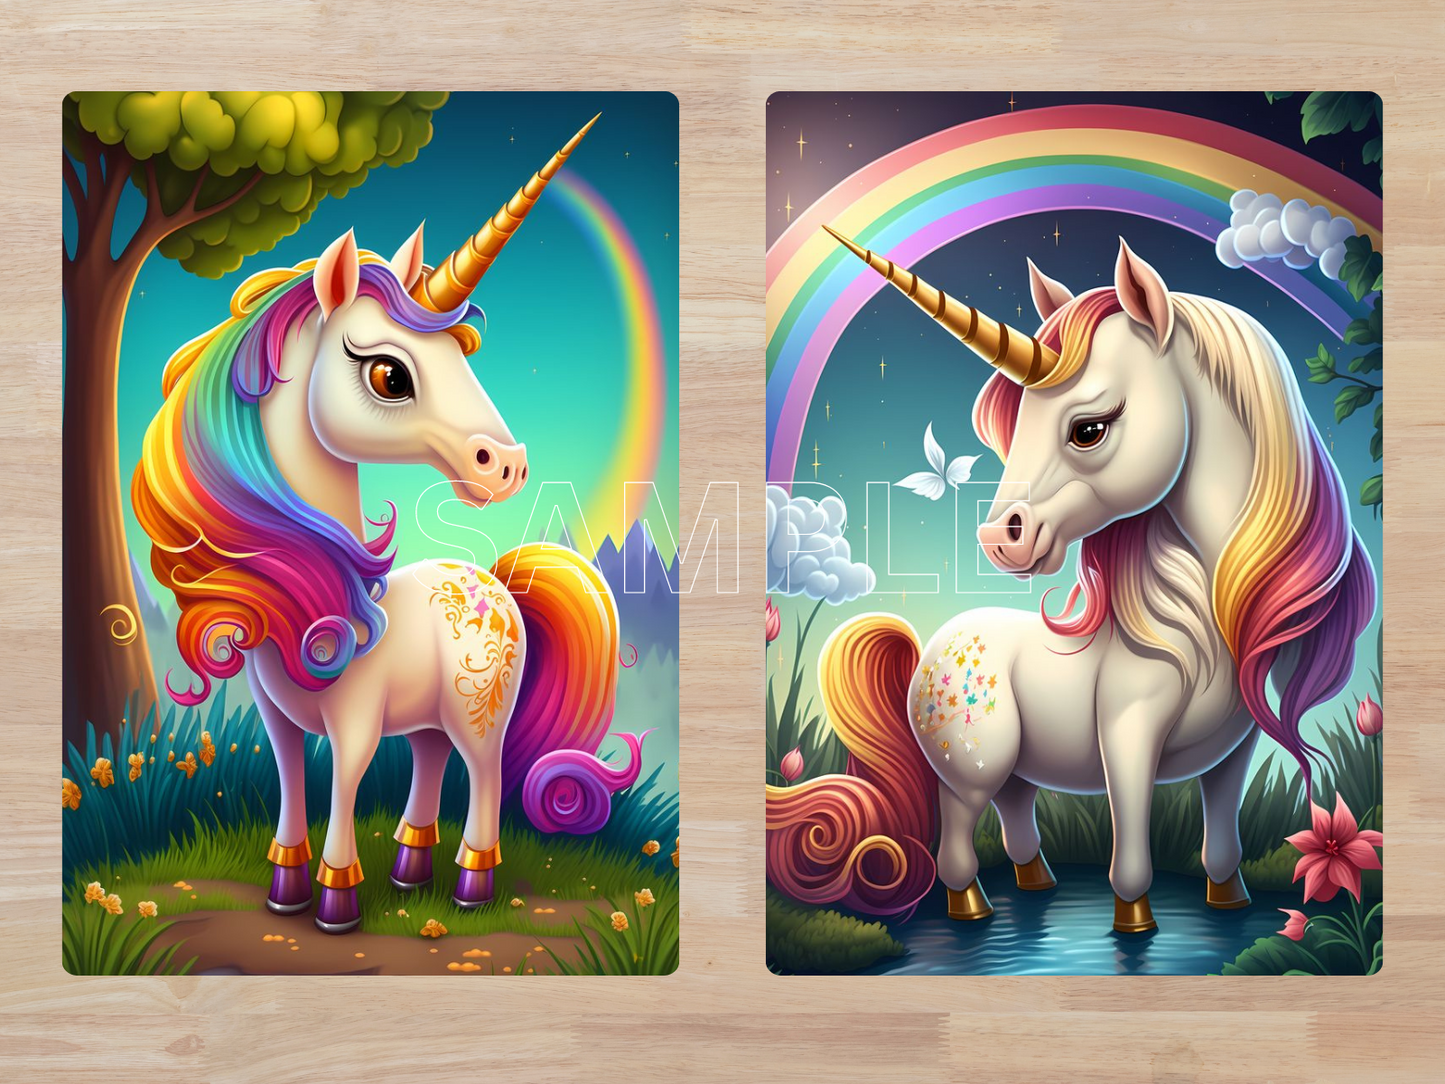 Fantasy Unicorns Digital ATC Cards, Set of 10, Digital Download